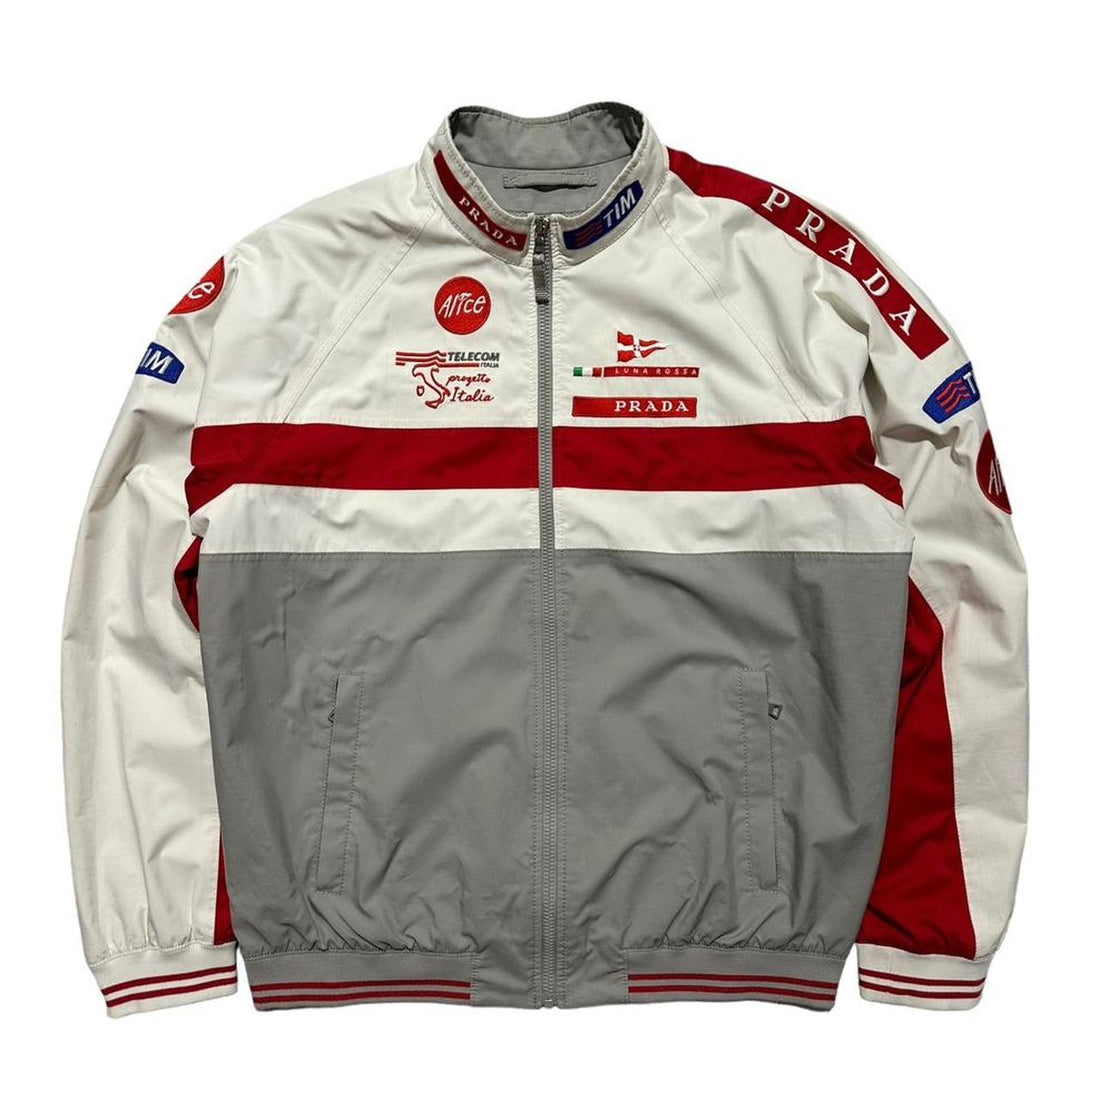 Prada Luna Rossa 2000's Sailing Team Racing Jacket